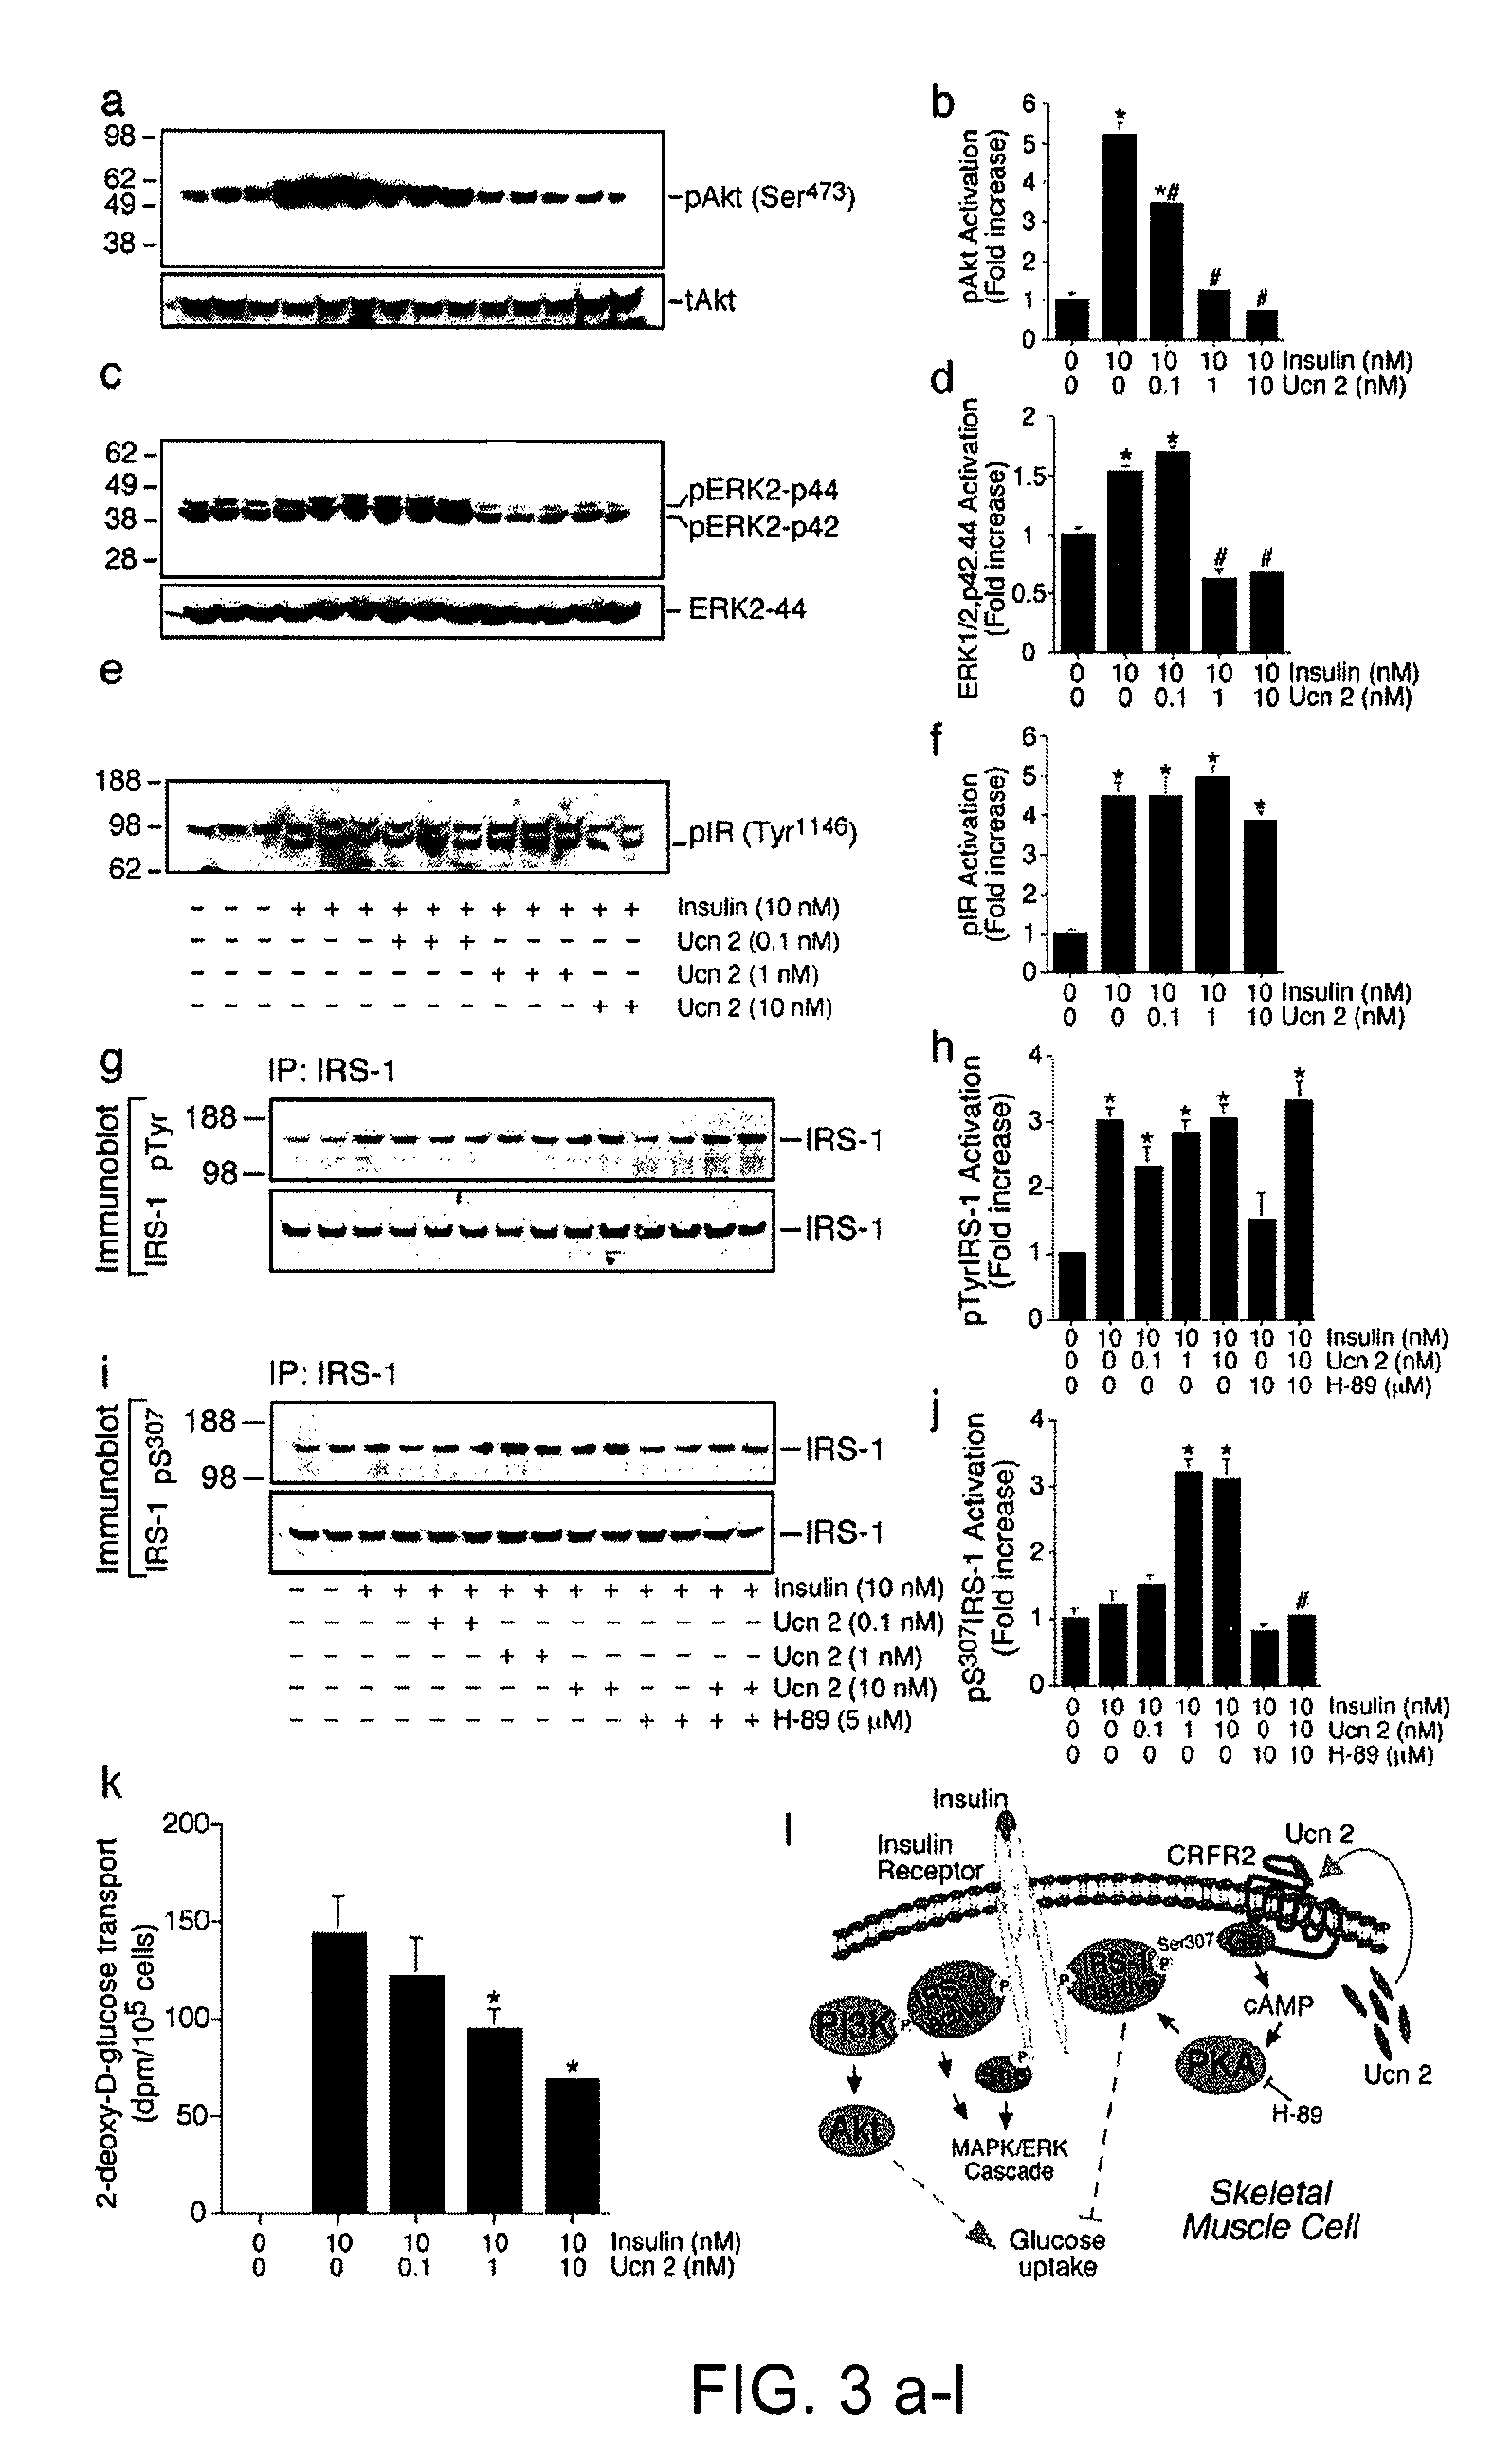 Methods of increasing insulin sensitivity or decreasing insulin secretion by administering corticotropin releasing factor receptor-2 inhibitors